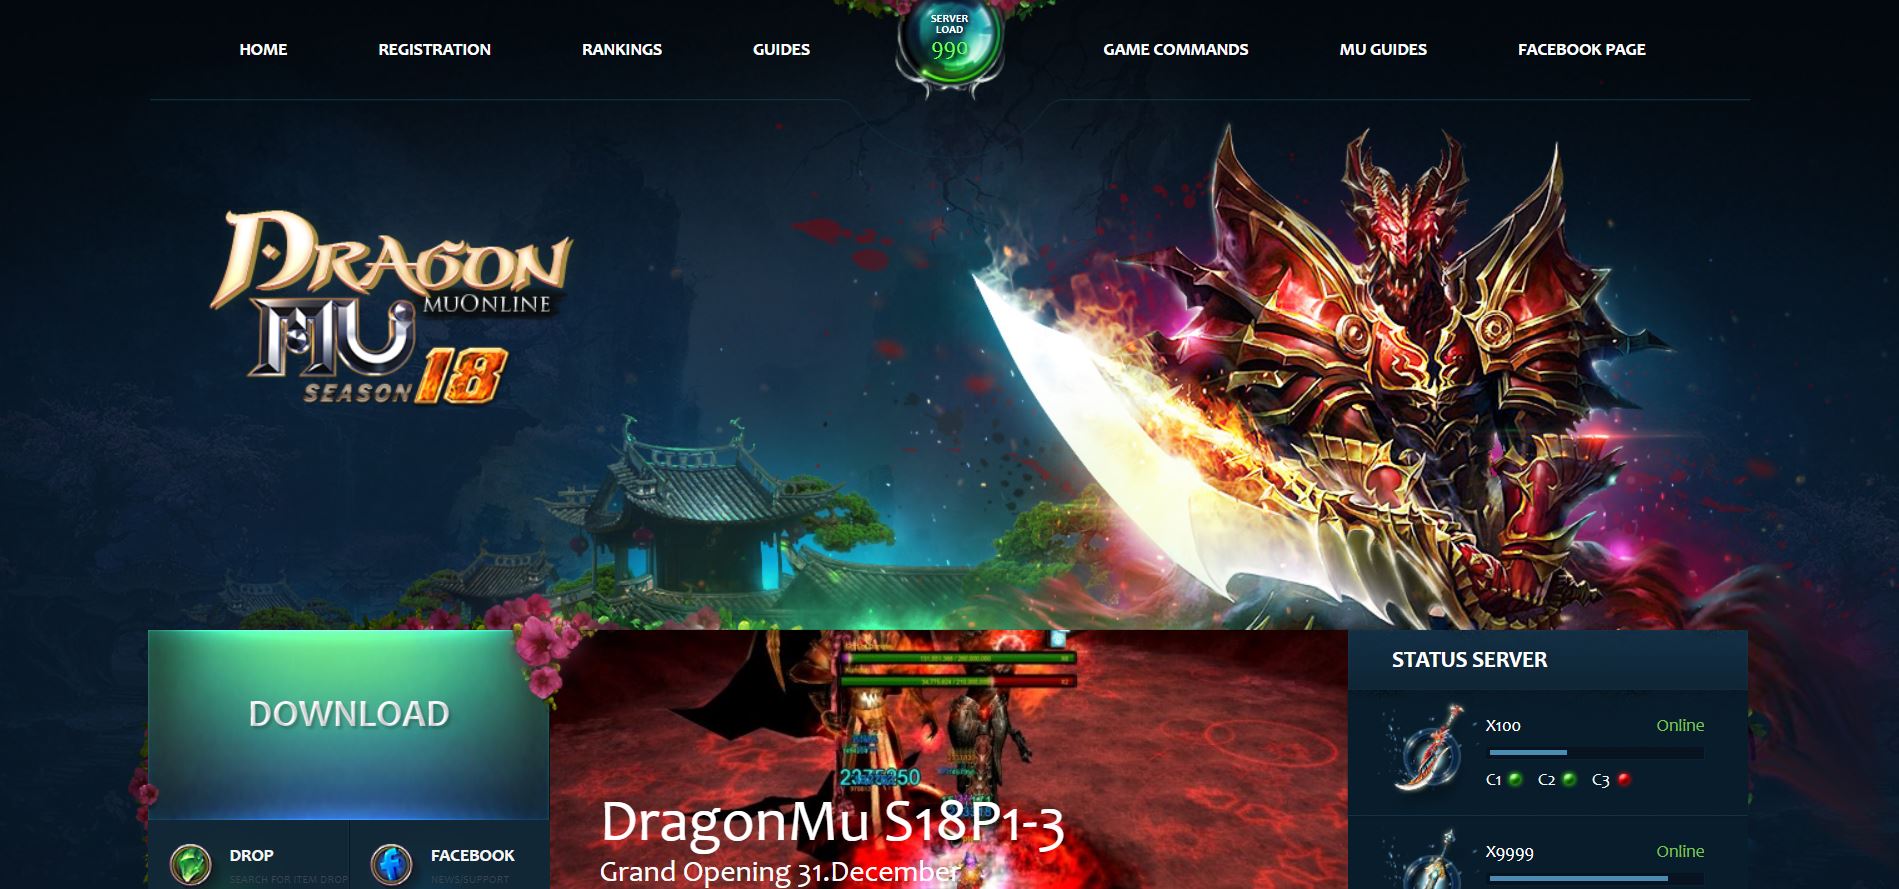 🐉 Abra as Portas do Dragão! MuOnline Season 18 x999k - Dragonmu.net 🐉